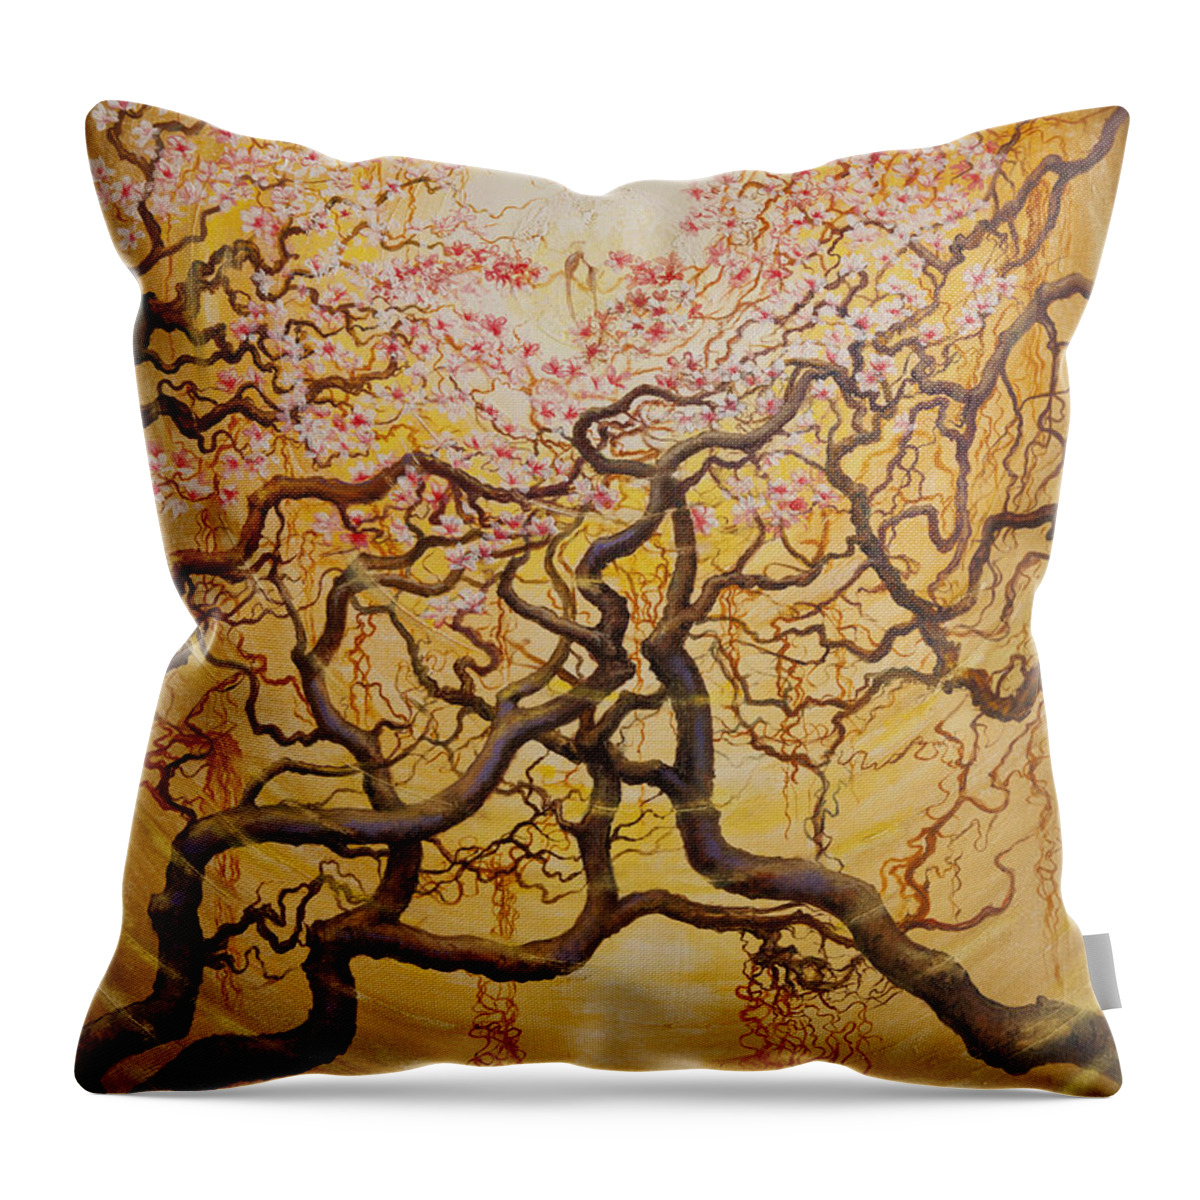 Sun Throw Pillow featuring the painting Sun and sakura by Vrindavan Das